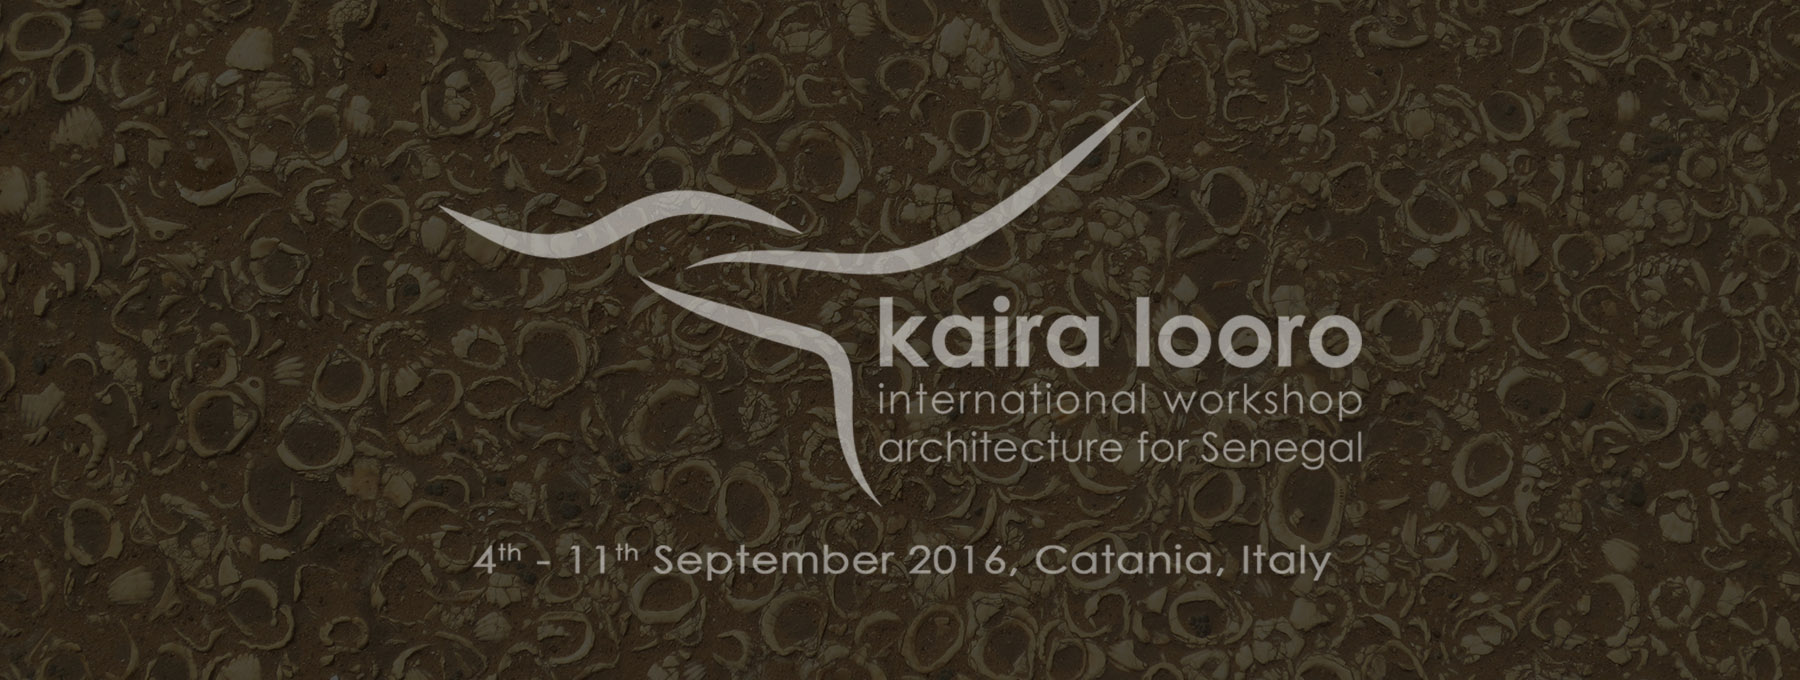 kaira Looro Workshop international